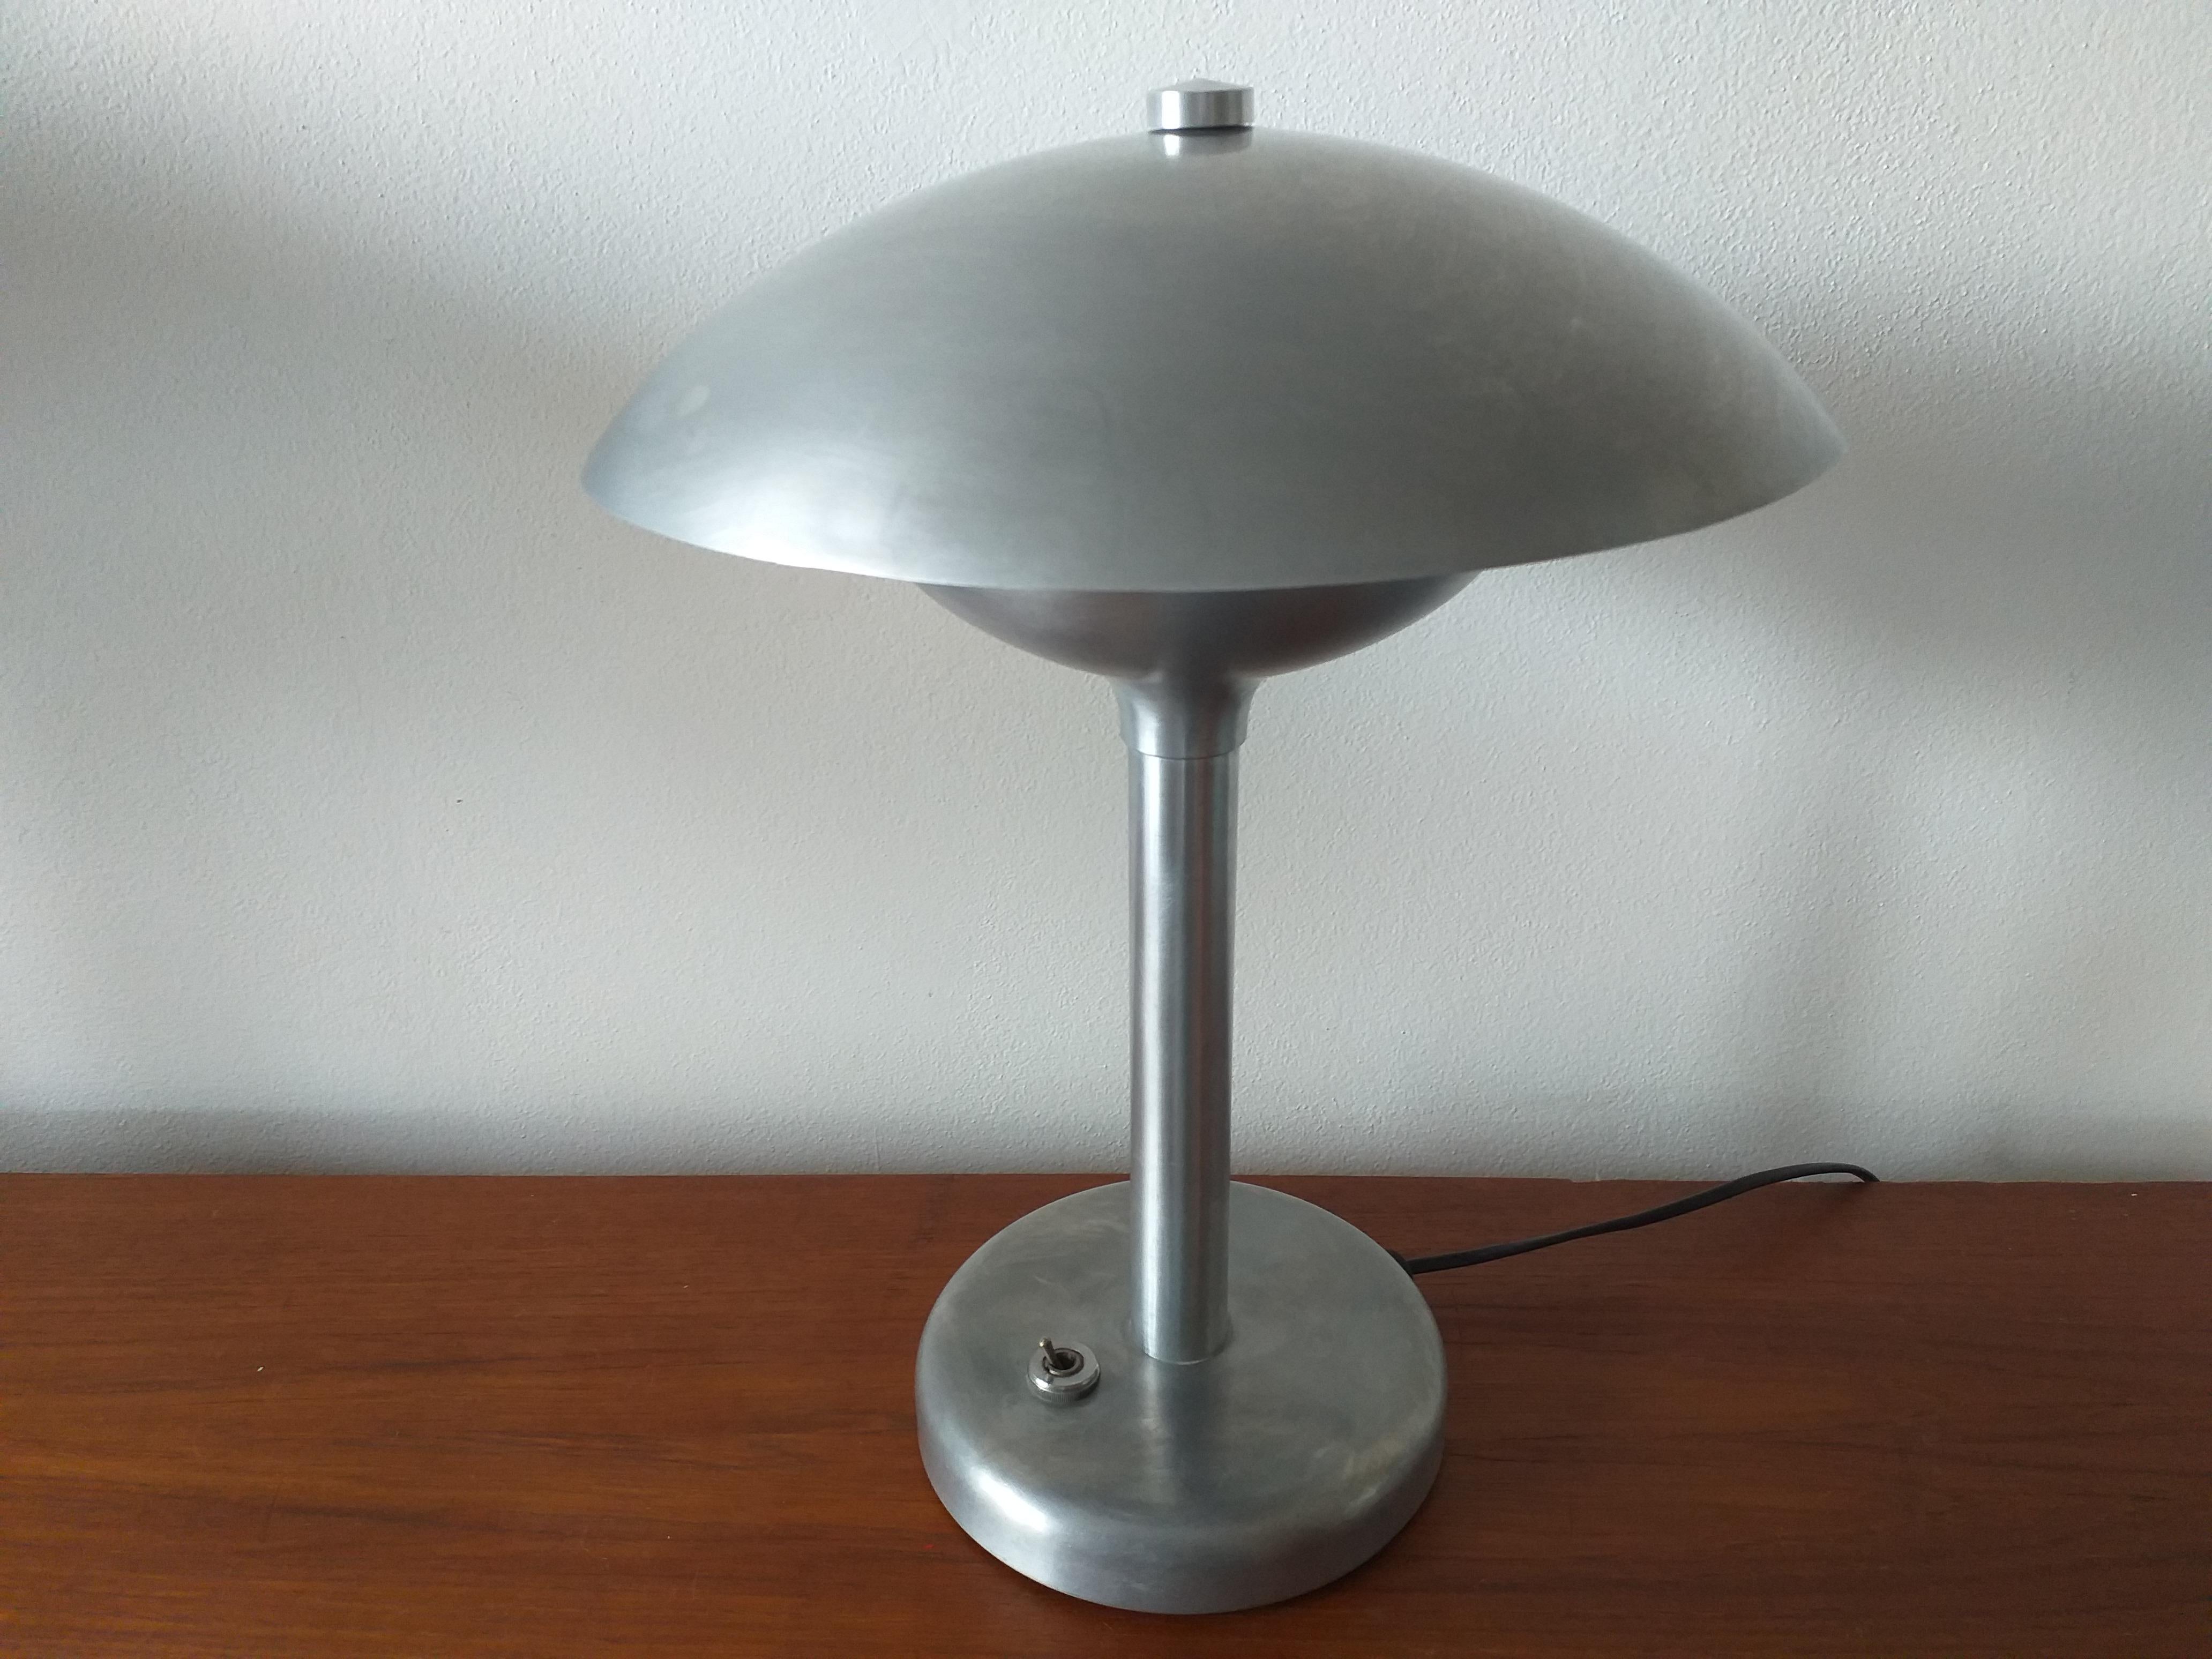 Czech Art Deco Table Lamp, Franta Anyz, Functionalism, Bauhaus, 1930s